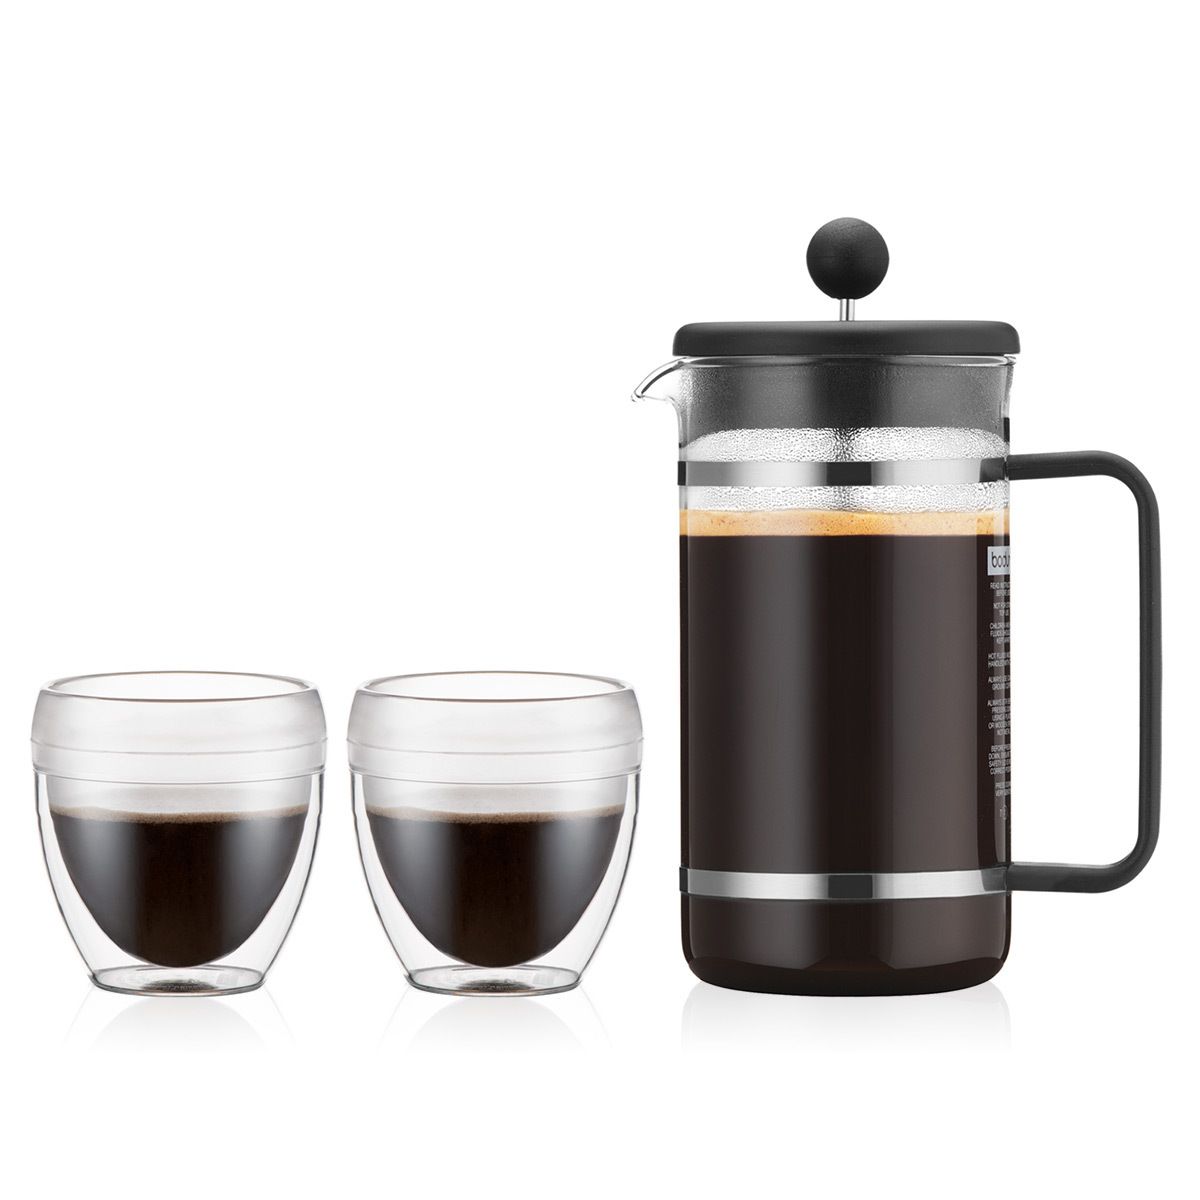 Bodum: French Press coffee maker, 8 cup SAN Beaker PLUS 2 pcs Pavina Outdoor 8 oz. Glasses $17.99 & More